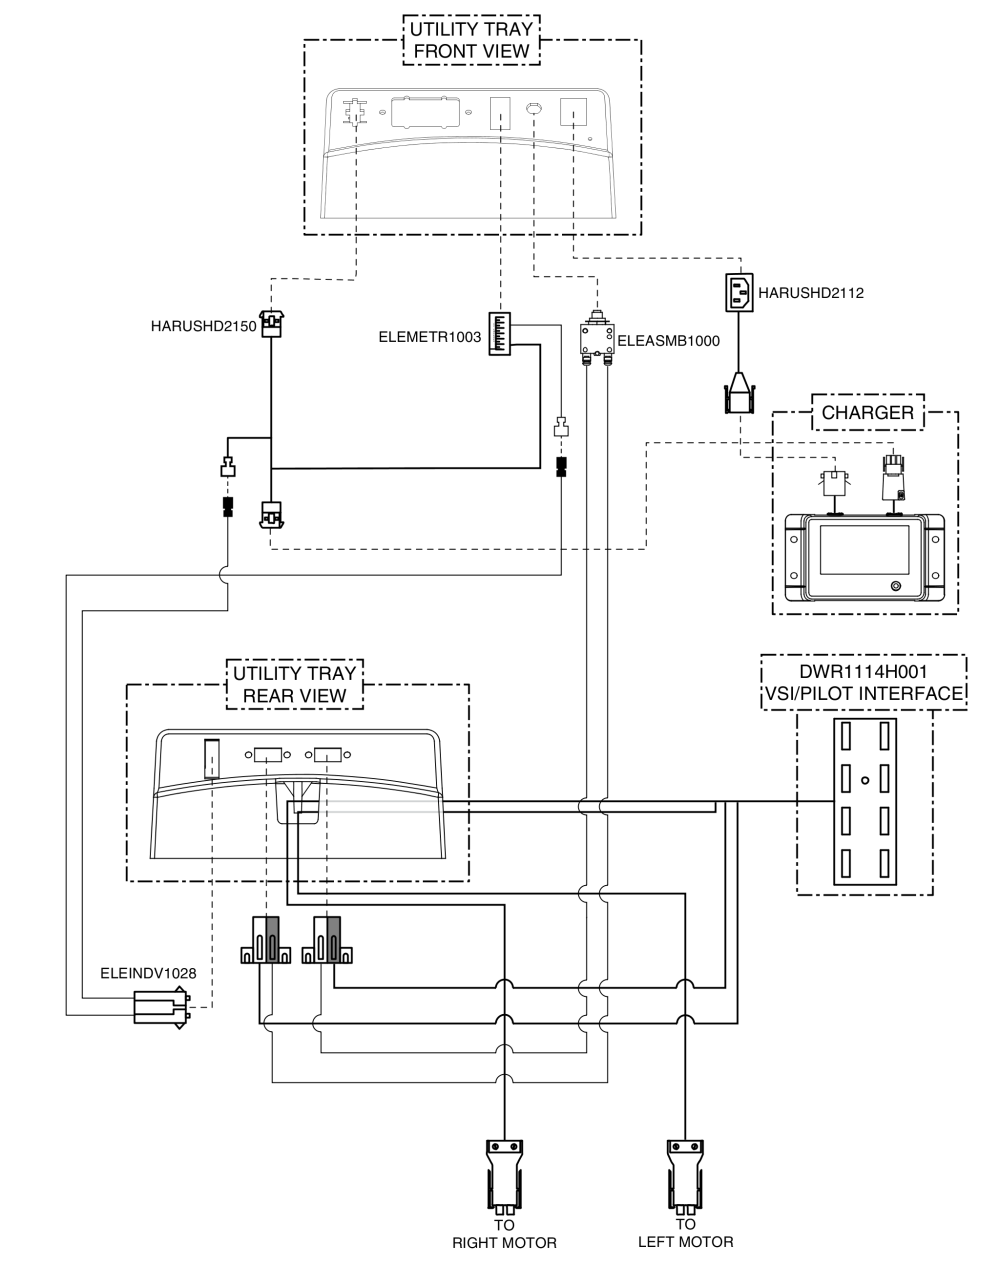 Pilot/vsi, Electrical System Diagram, Jazzy 1113 Ats parts diagram